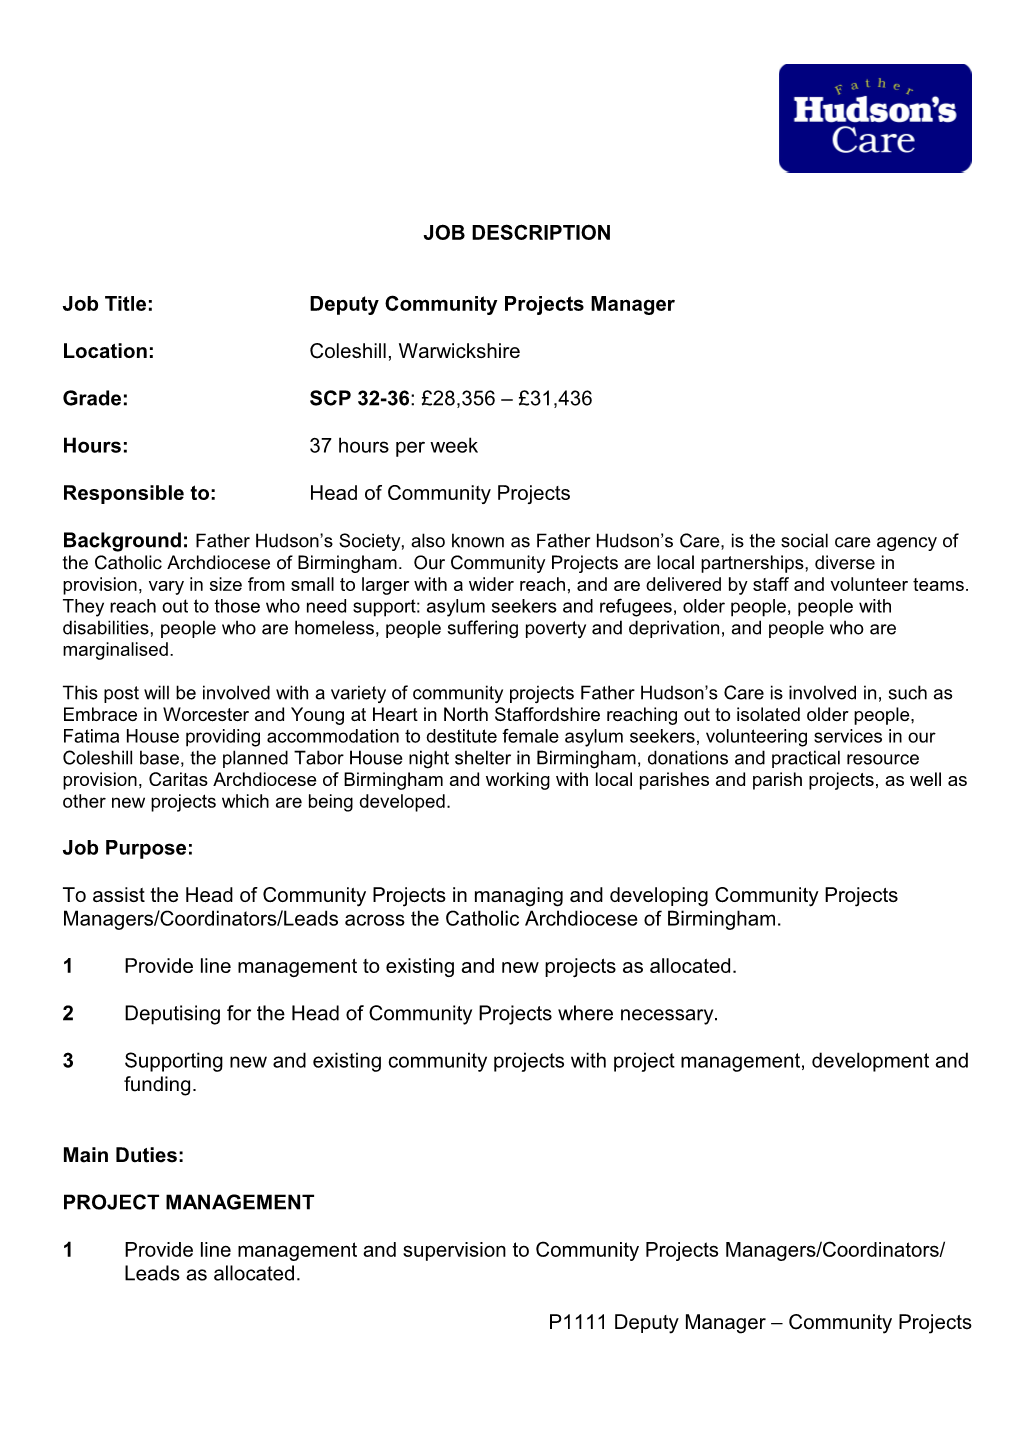 Job Title:Deputycommunity Projects Manager